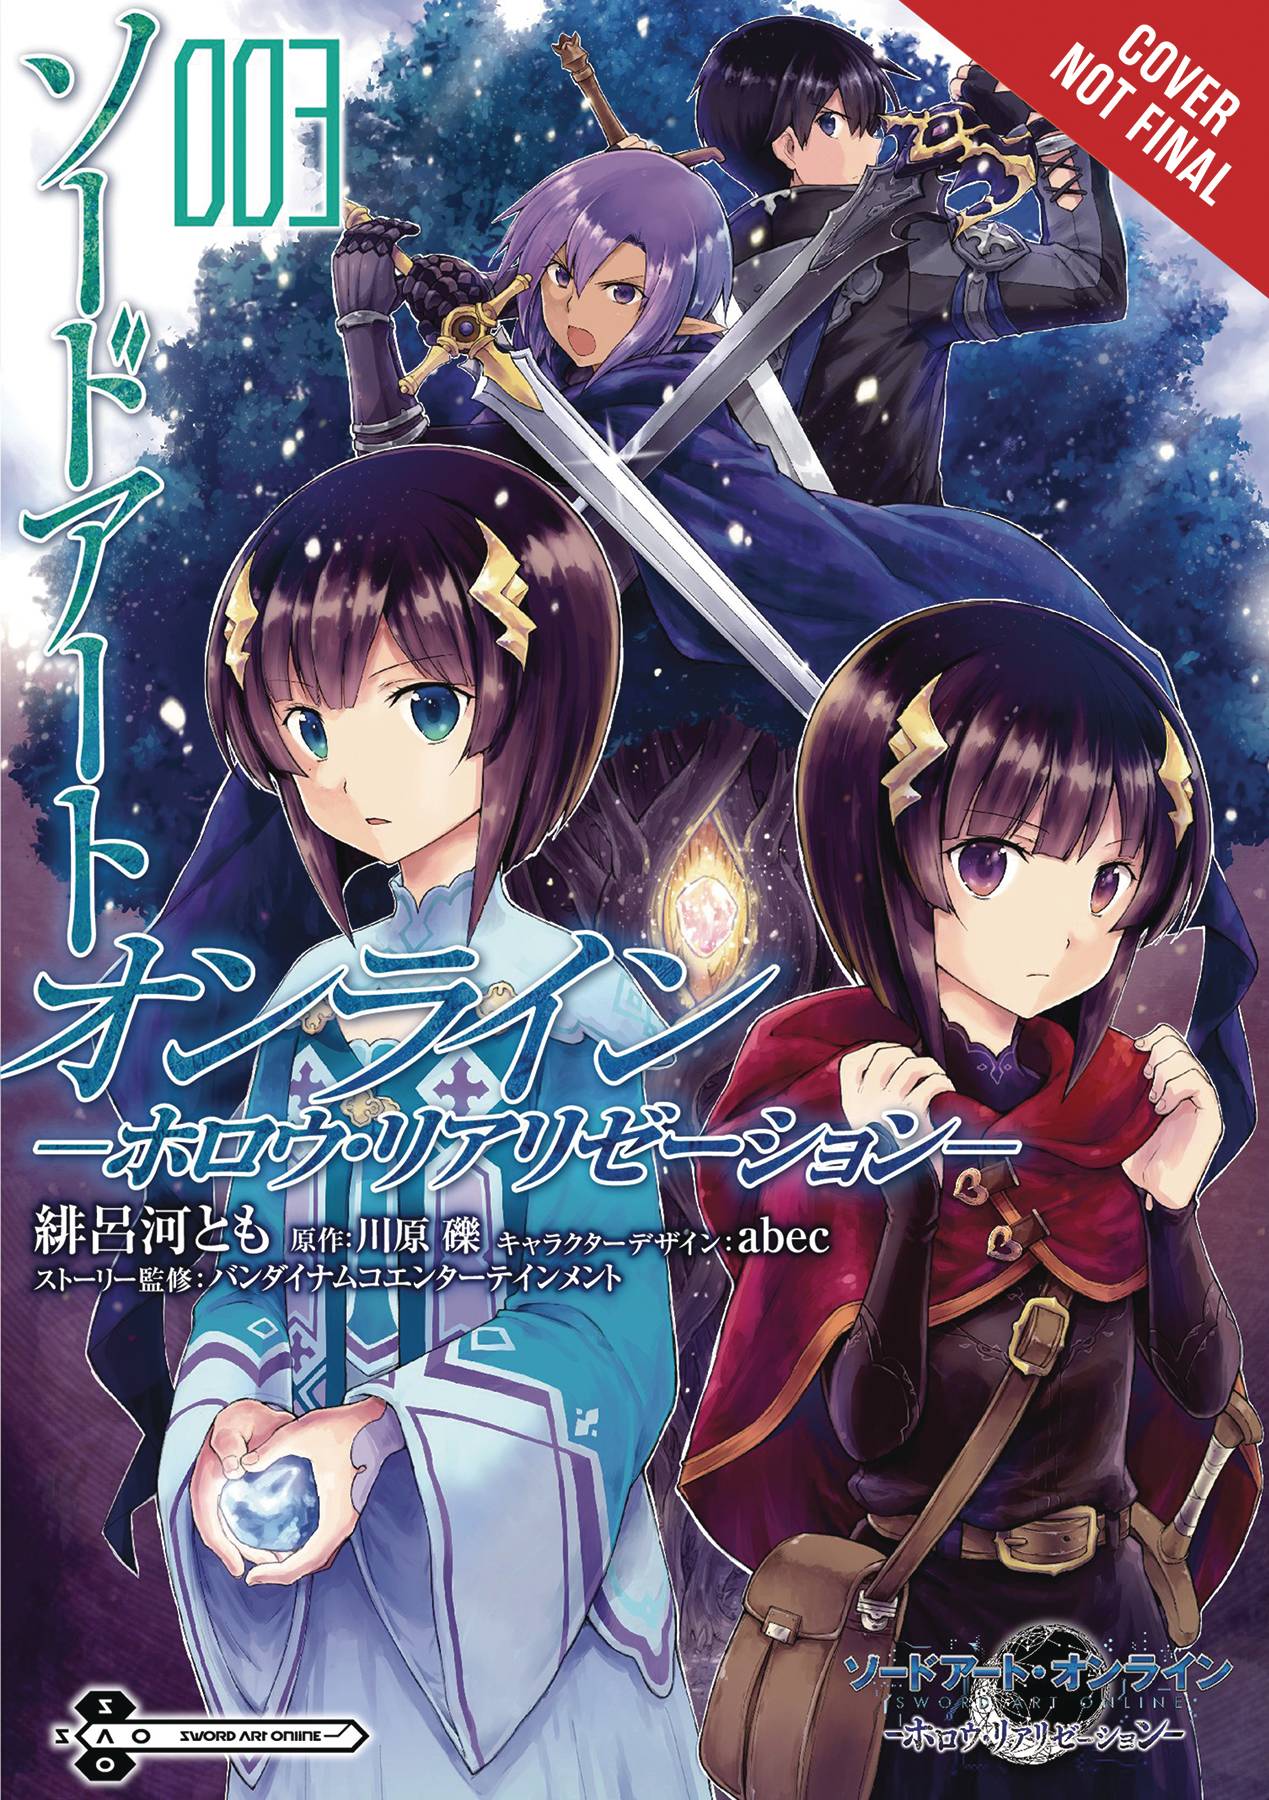 Sword Art Online Hollow Realization Manga Volume 3